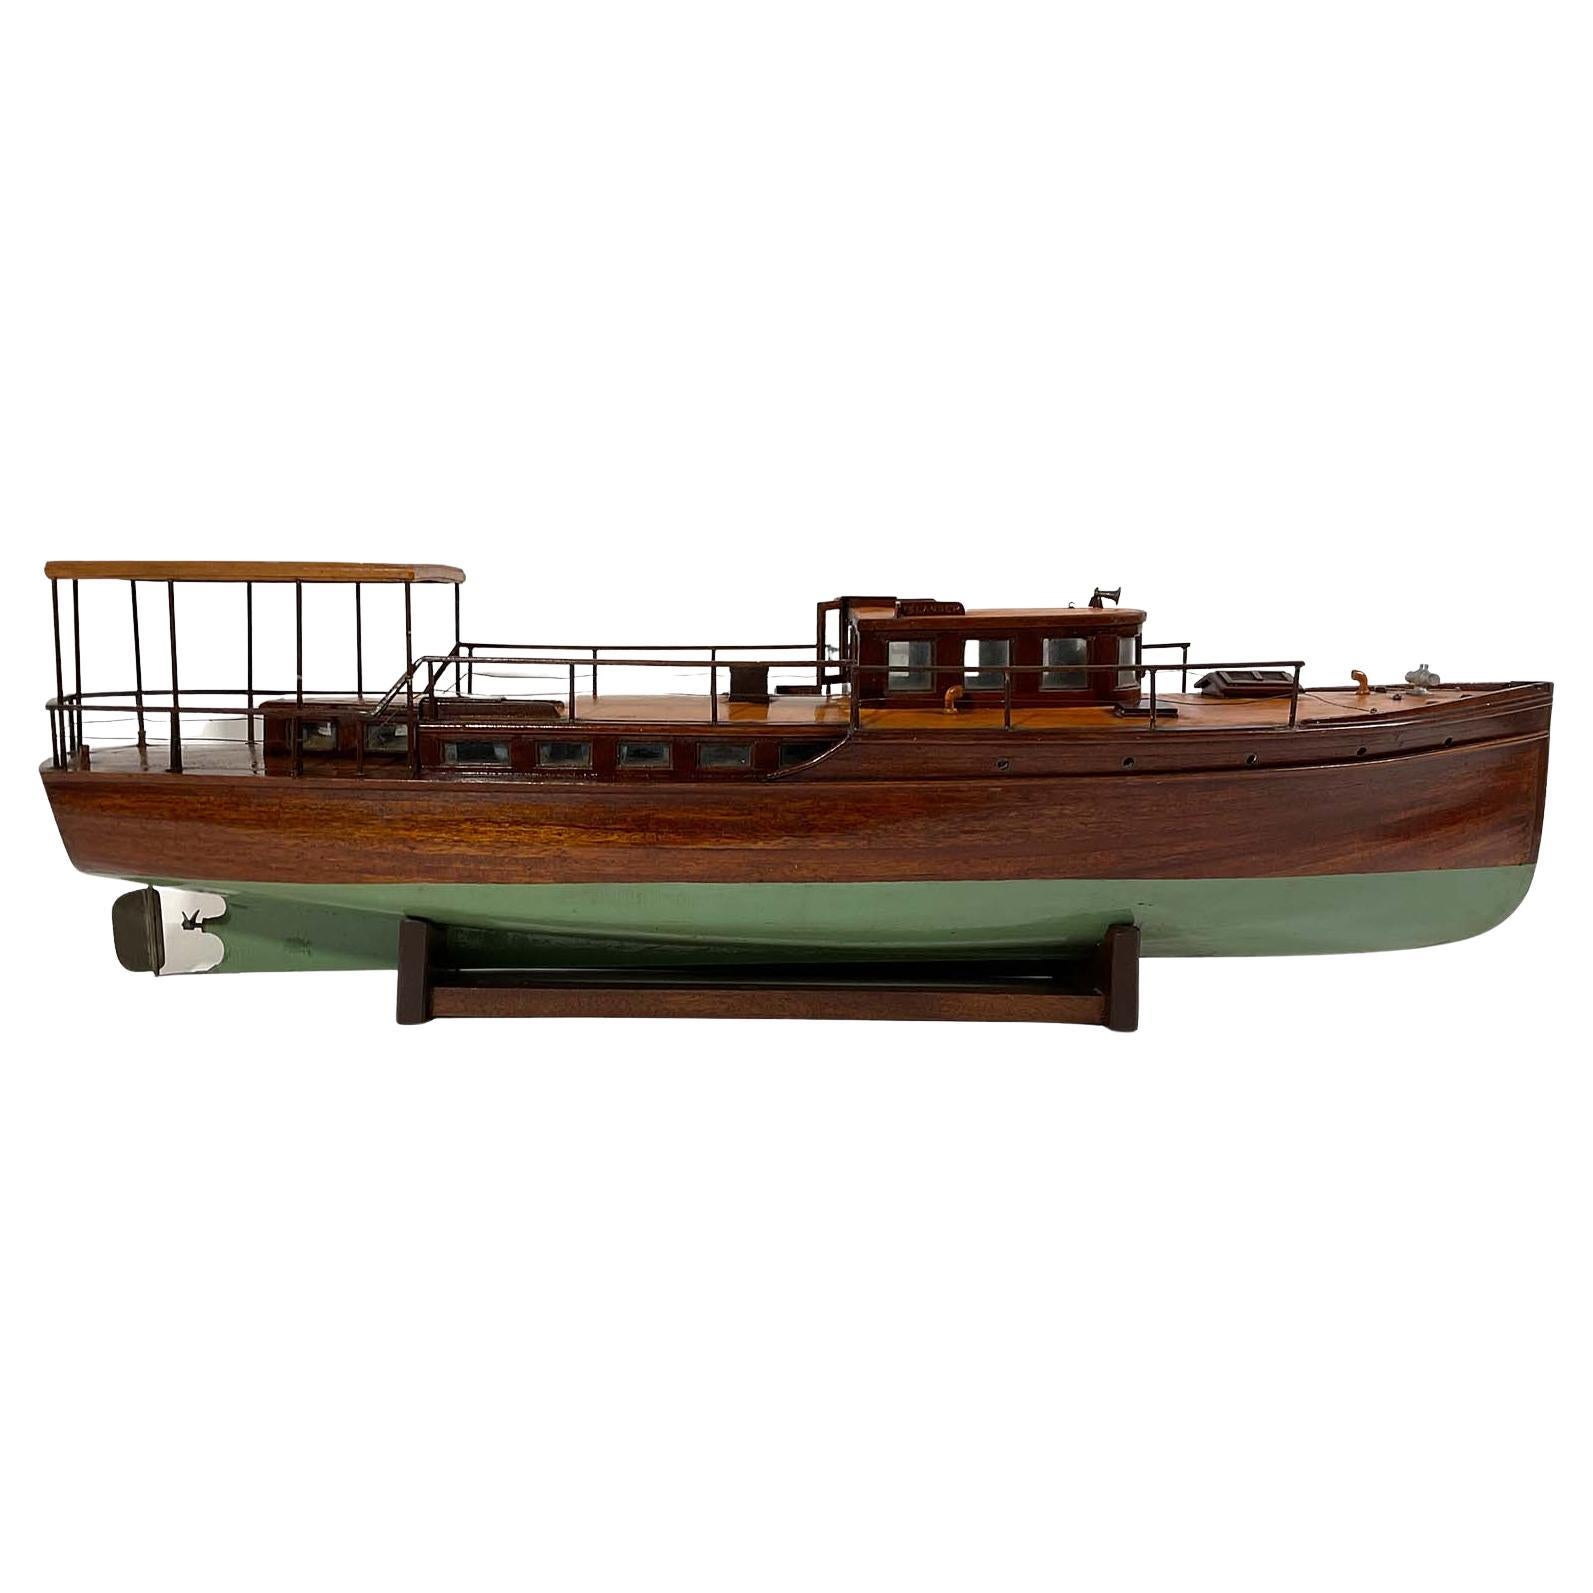 Planked Model of the 1920s Boston Yacht Islander